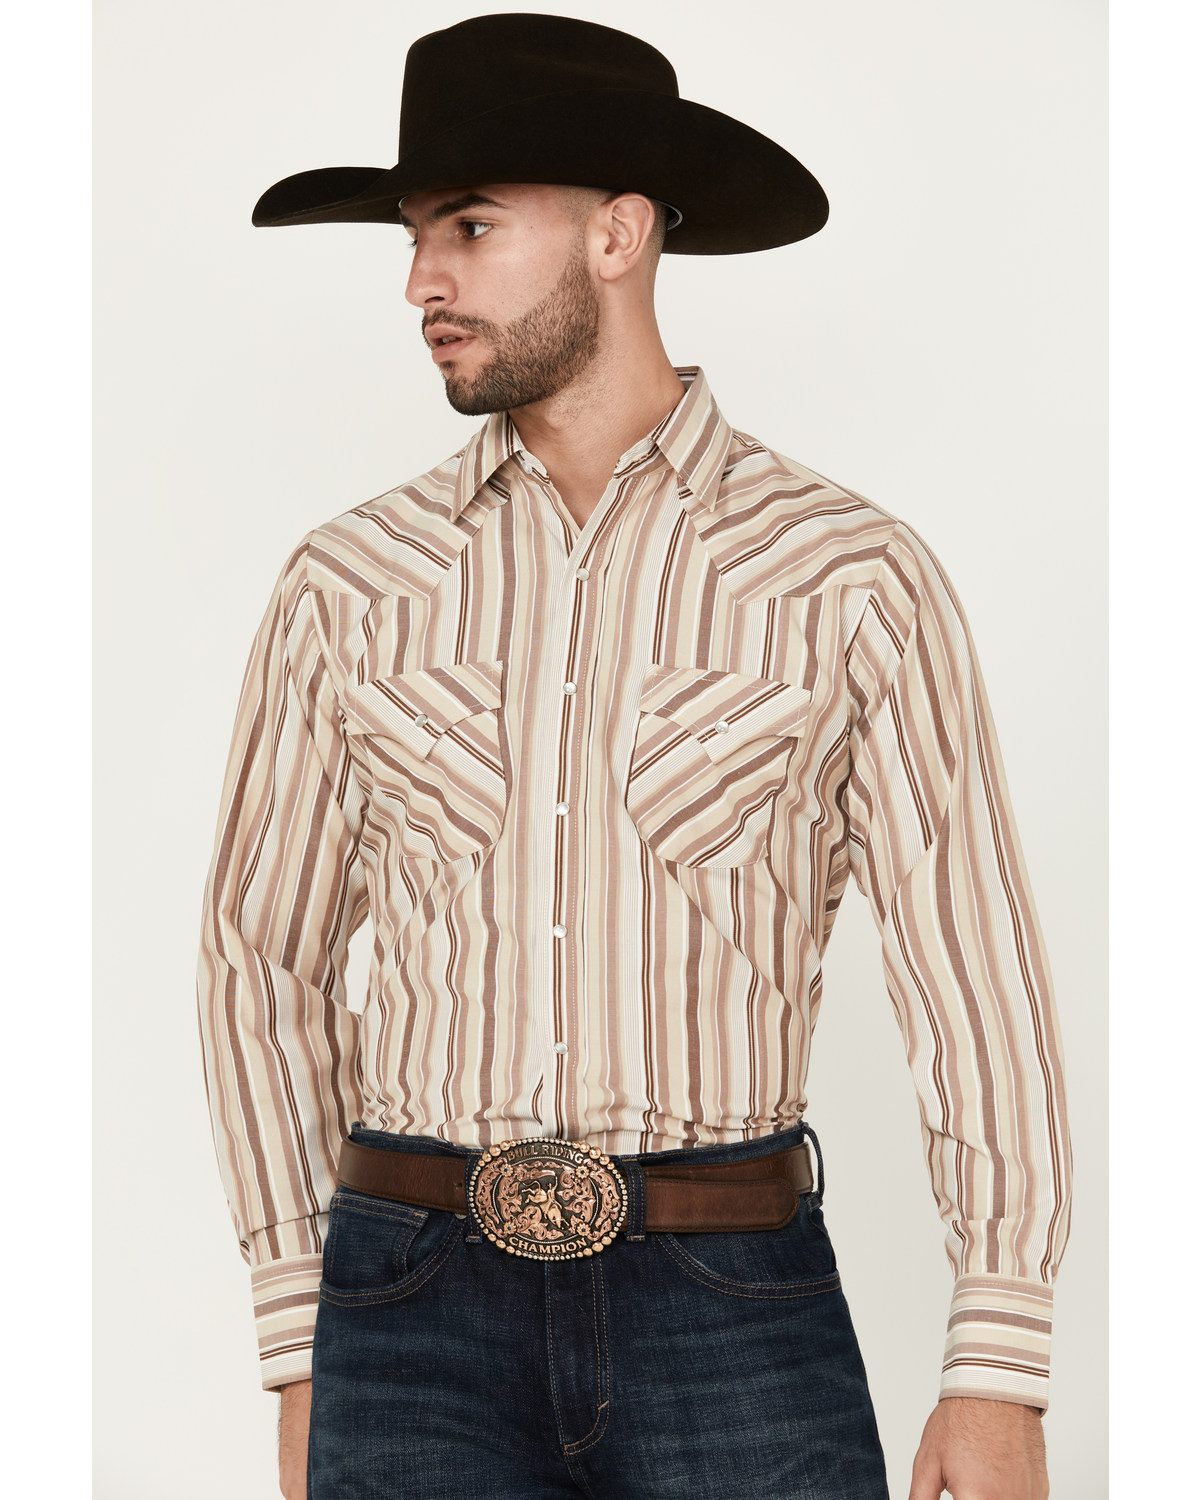 Ely Walker Men's Striped Print Long Sleeve Snap Western Shirt